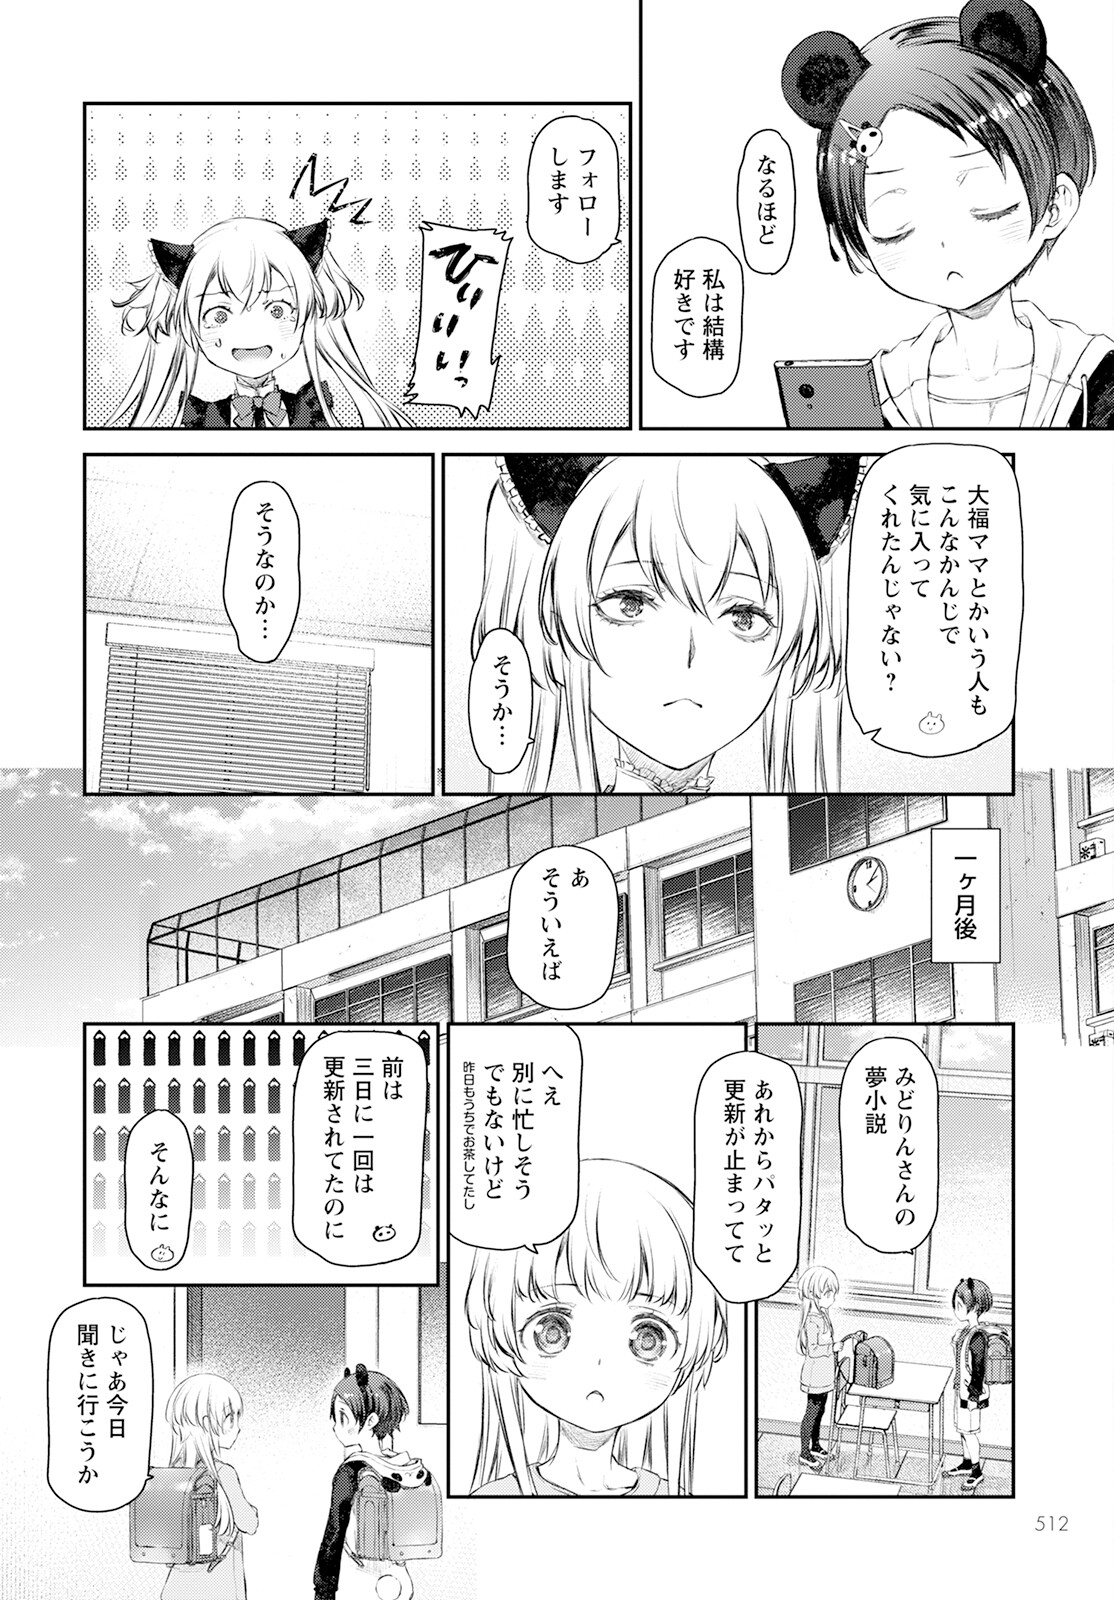 Uchi no Maid ga Uzasugiru! - Chapter 56 - Page 16